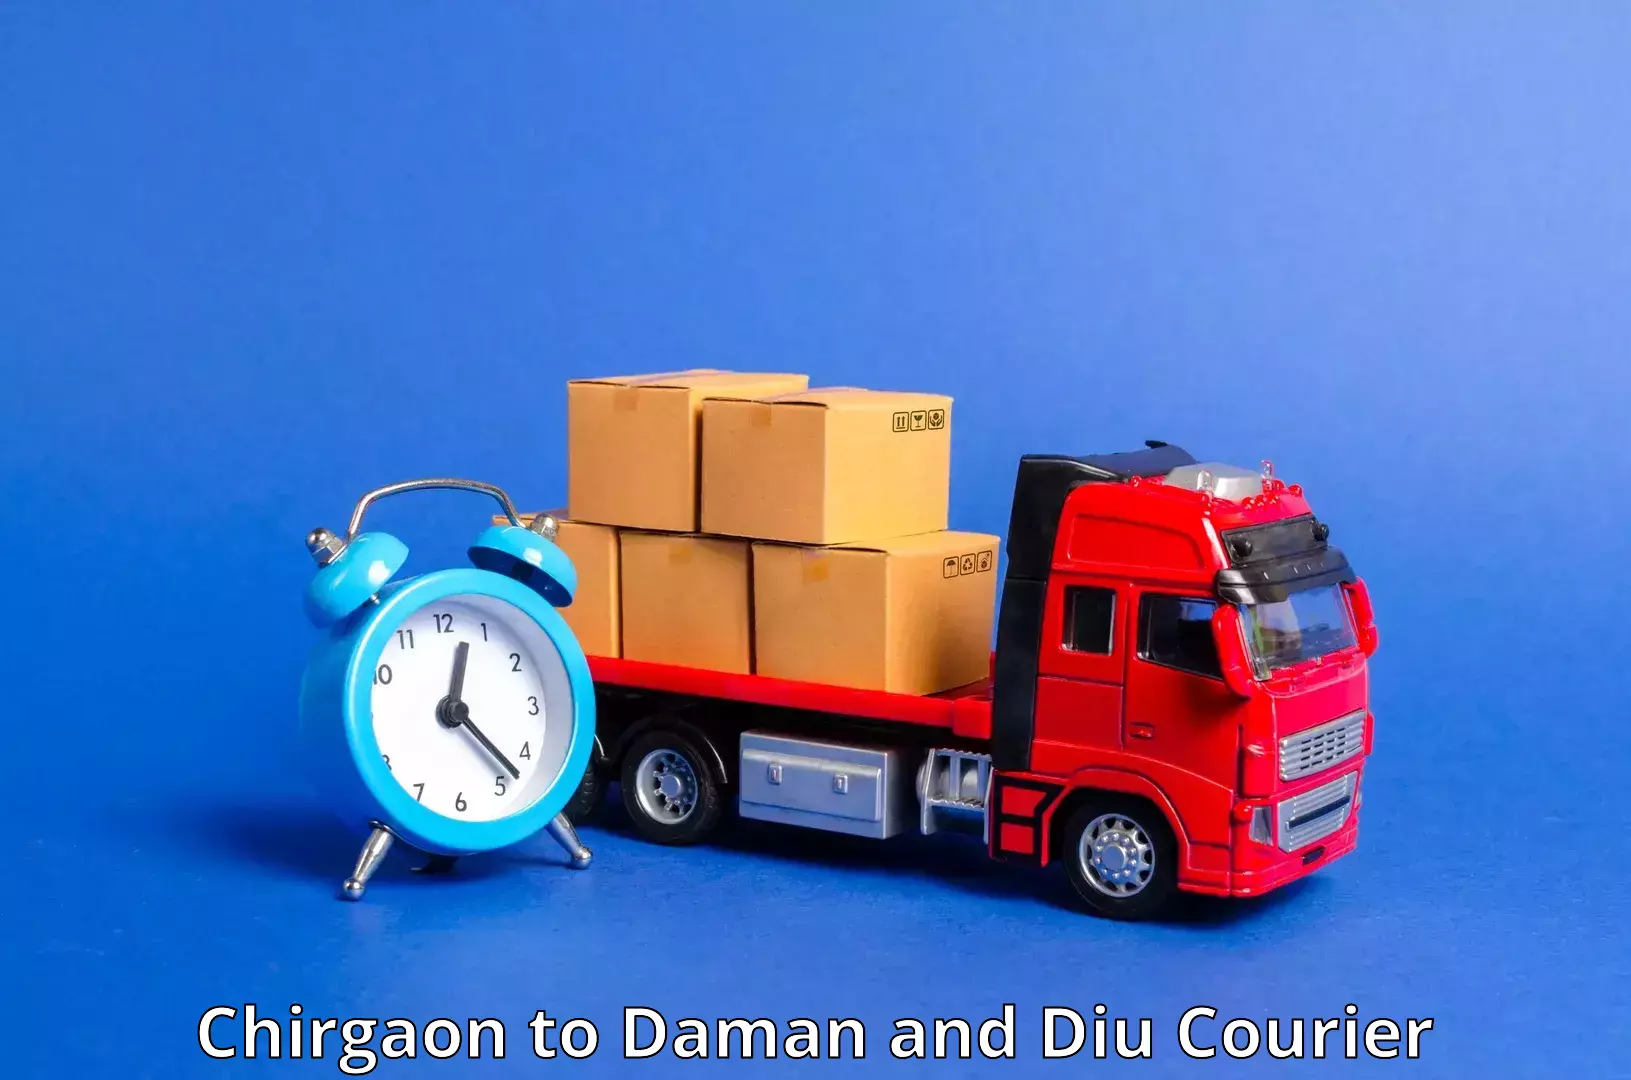 High-speed parcel service Chirgaon to Daman